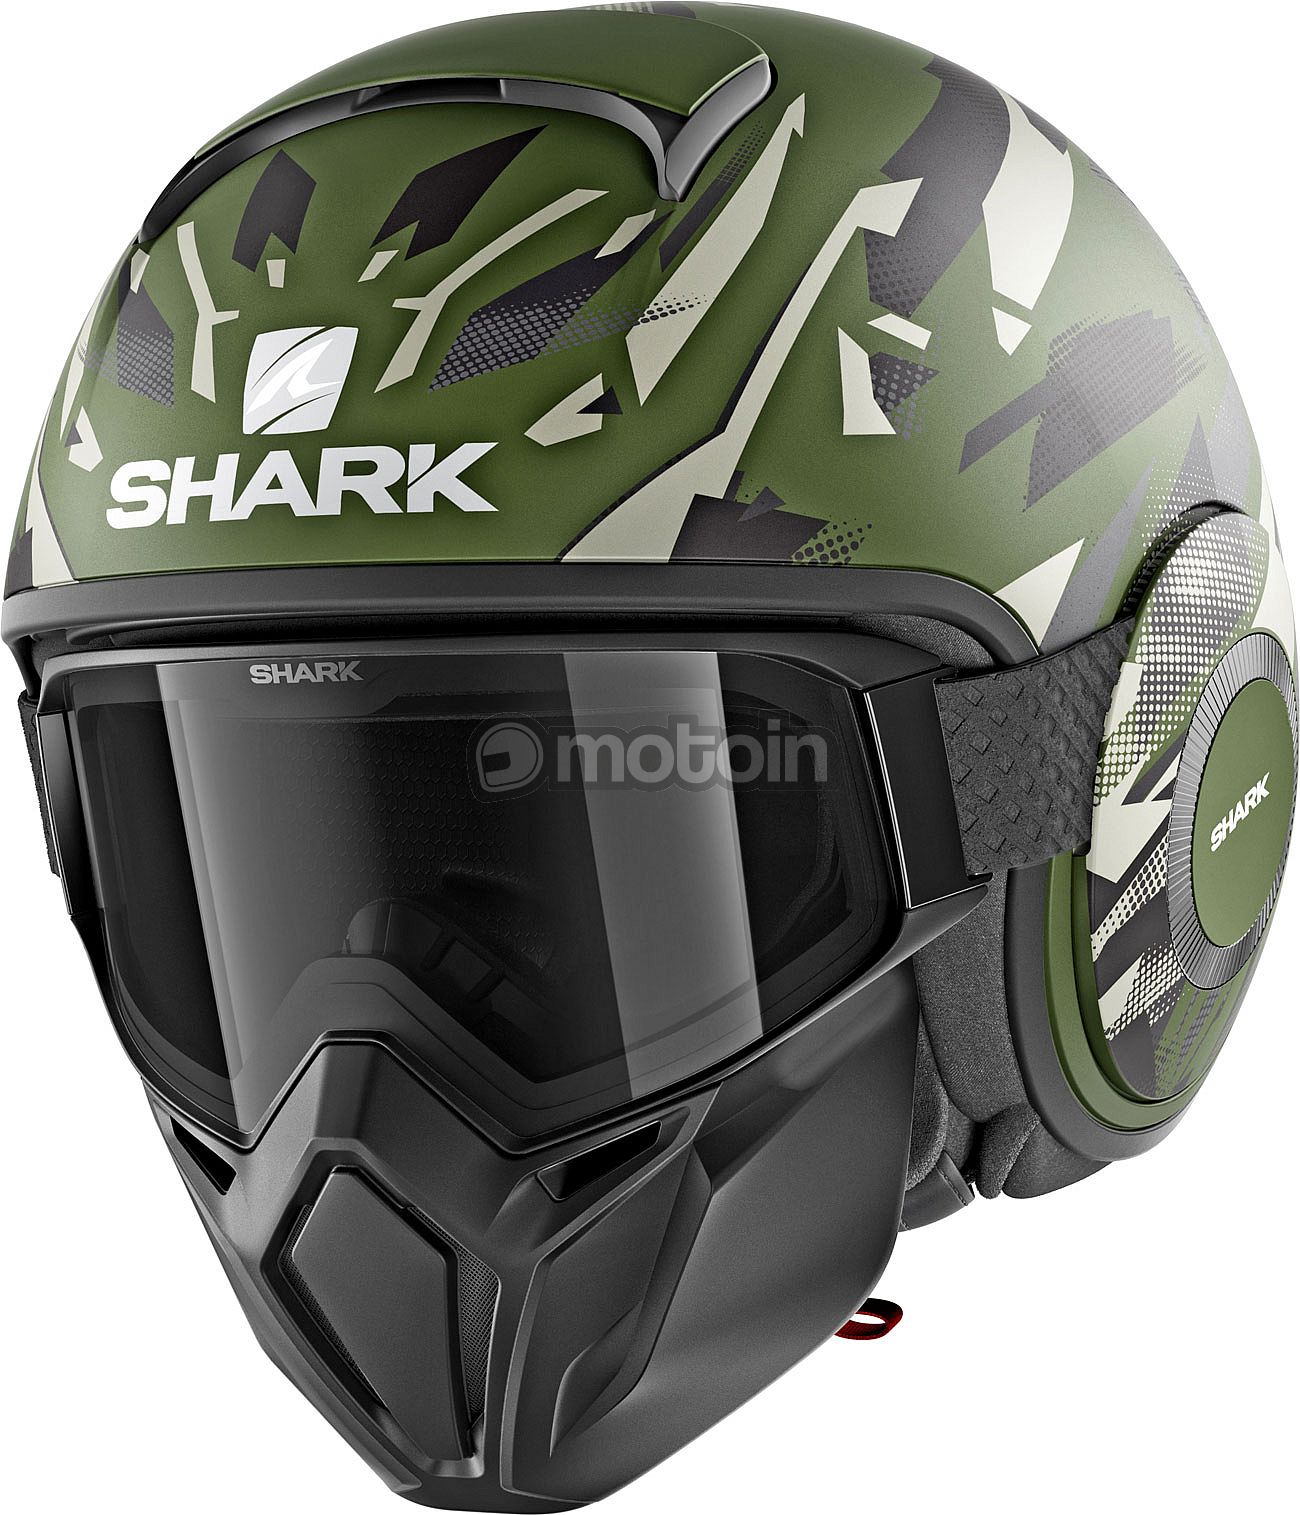 Shark Street Drak Kanhji, реактивный шлем